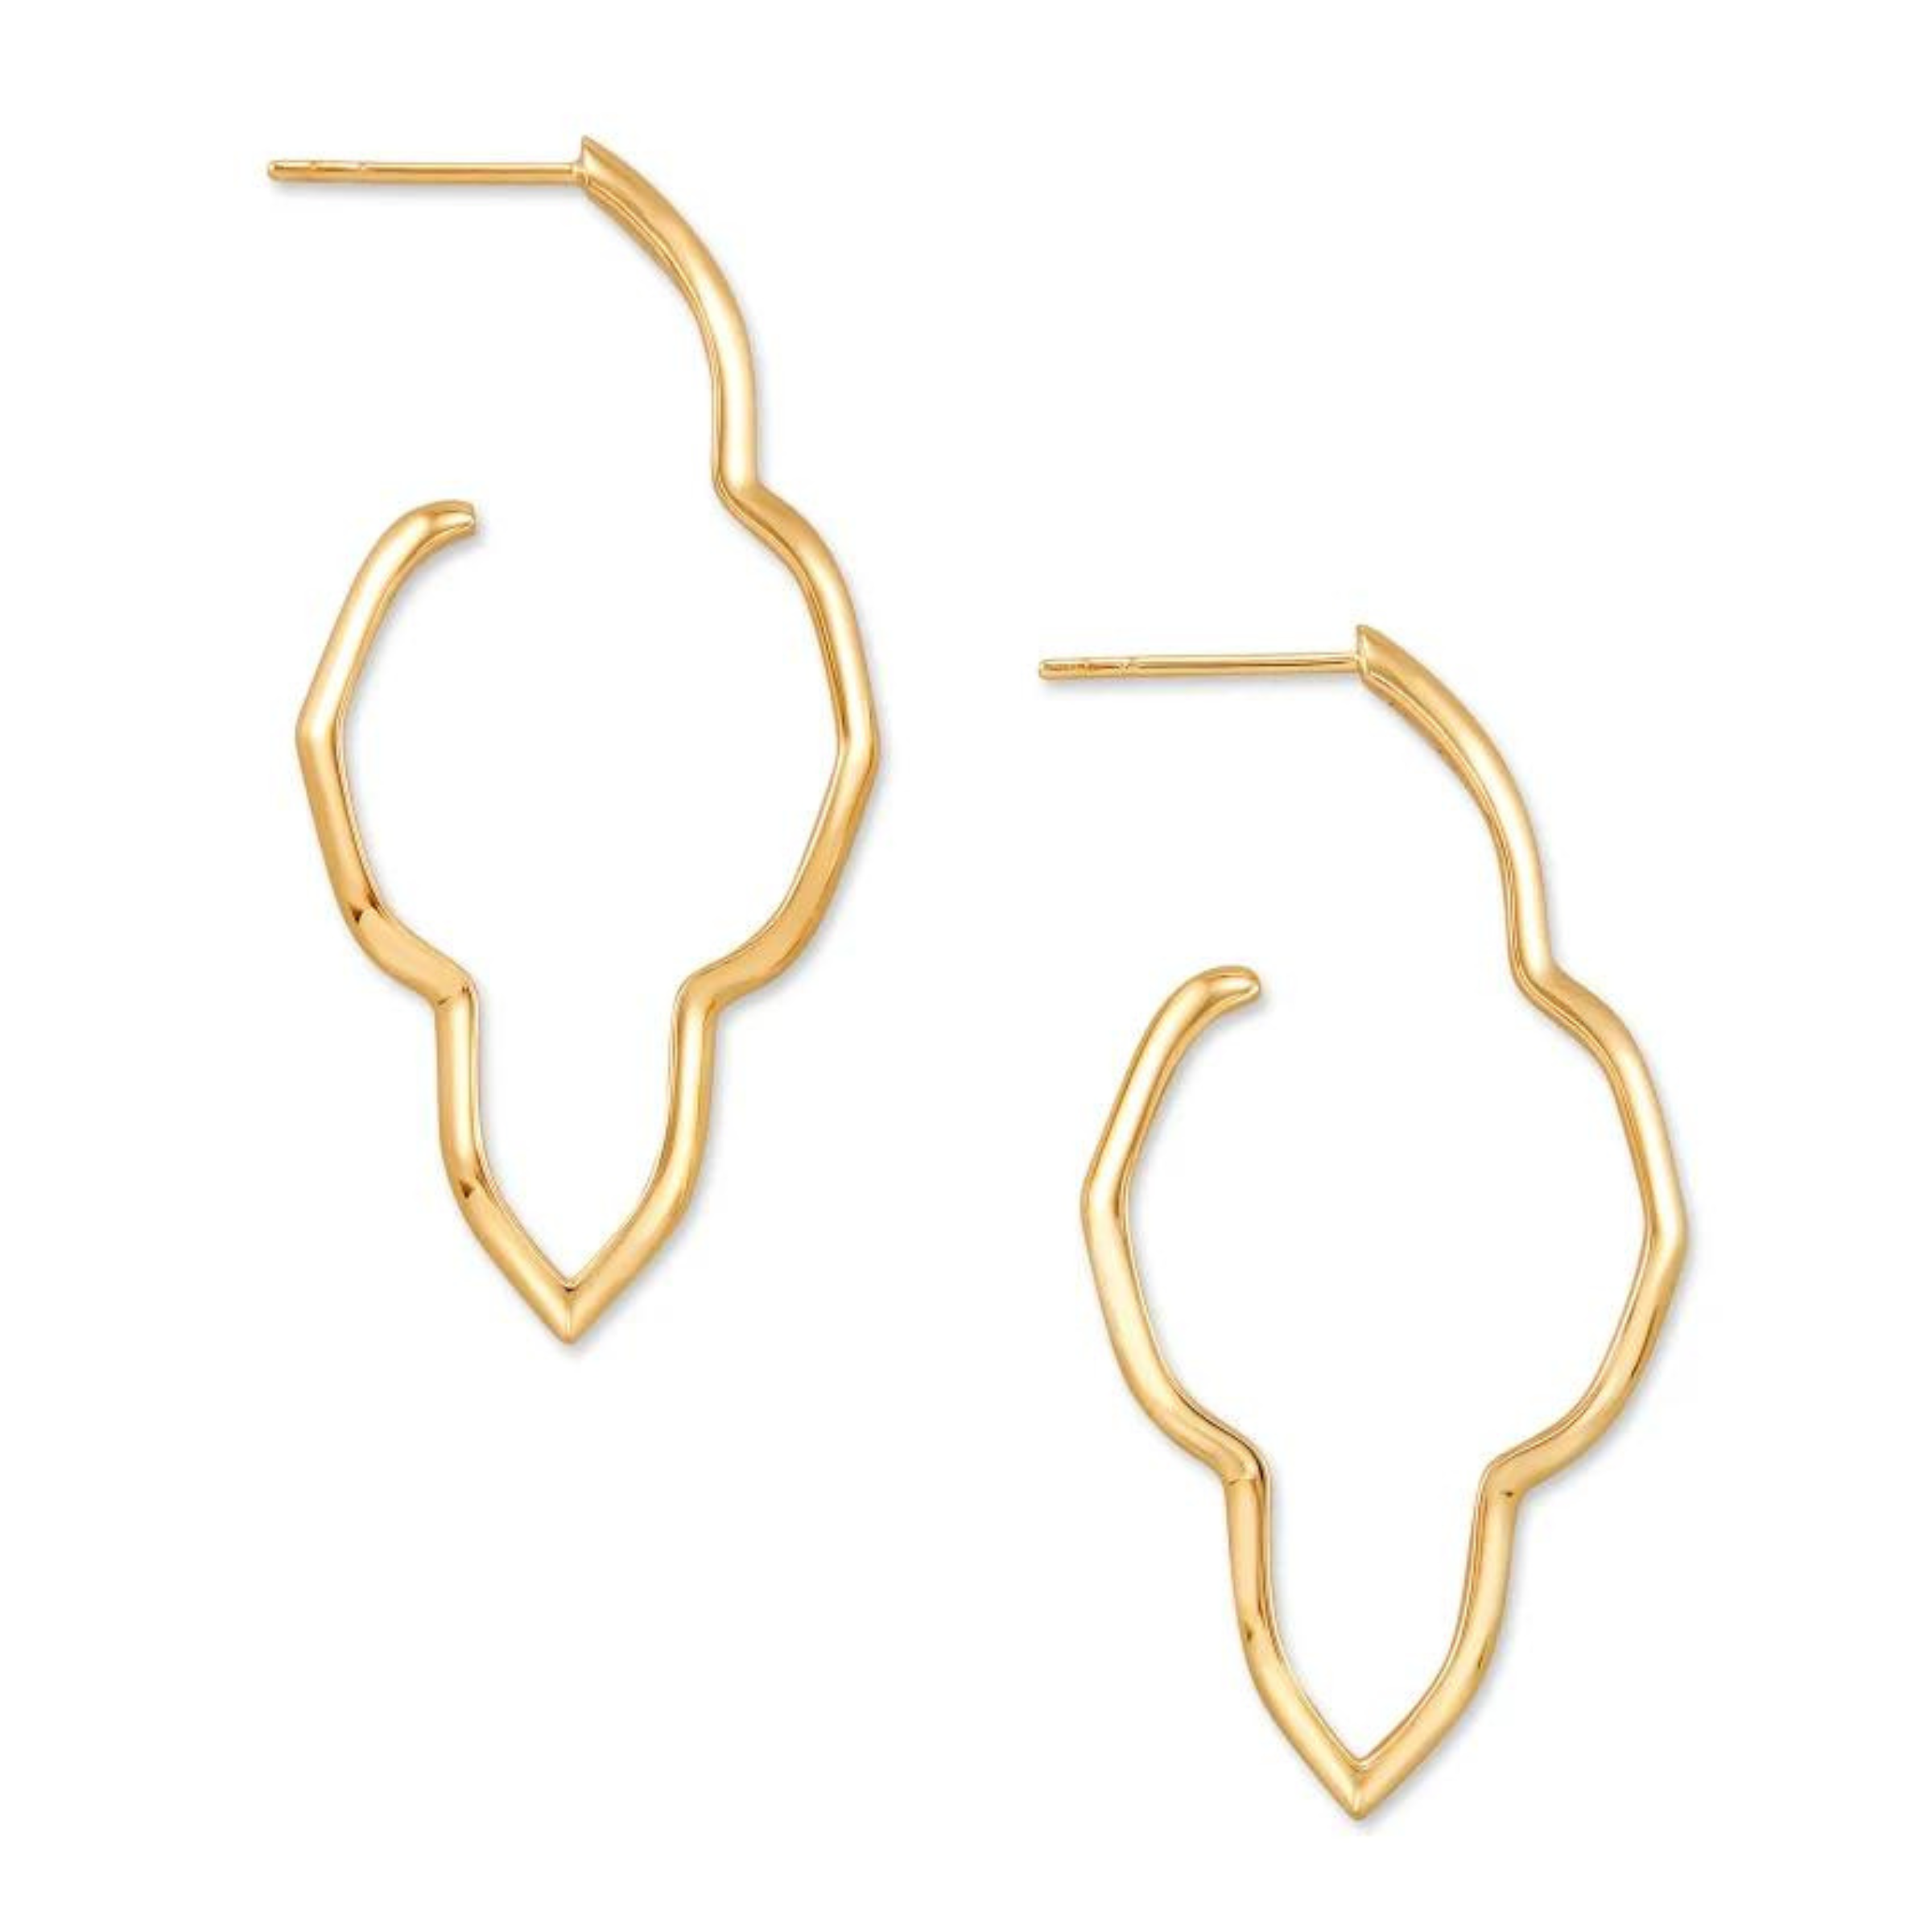 Kendra Scott | Darla Hoop Earrings in 18k Yellow Gold Vermeil - Giddy Up Glamour Boutique